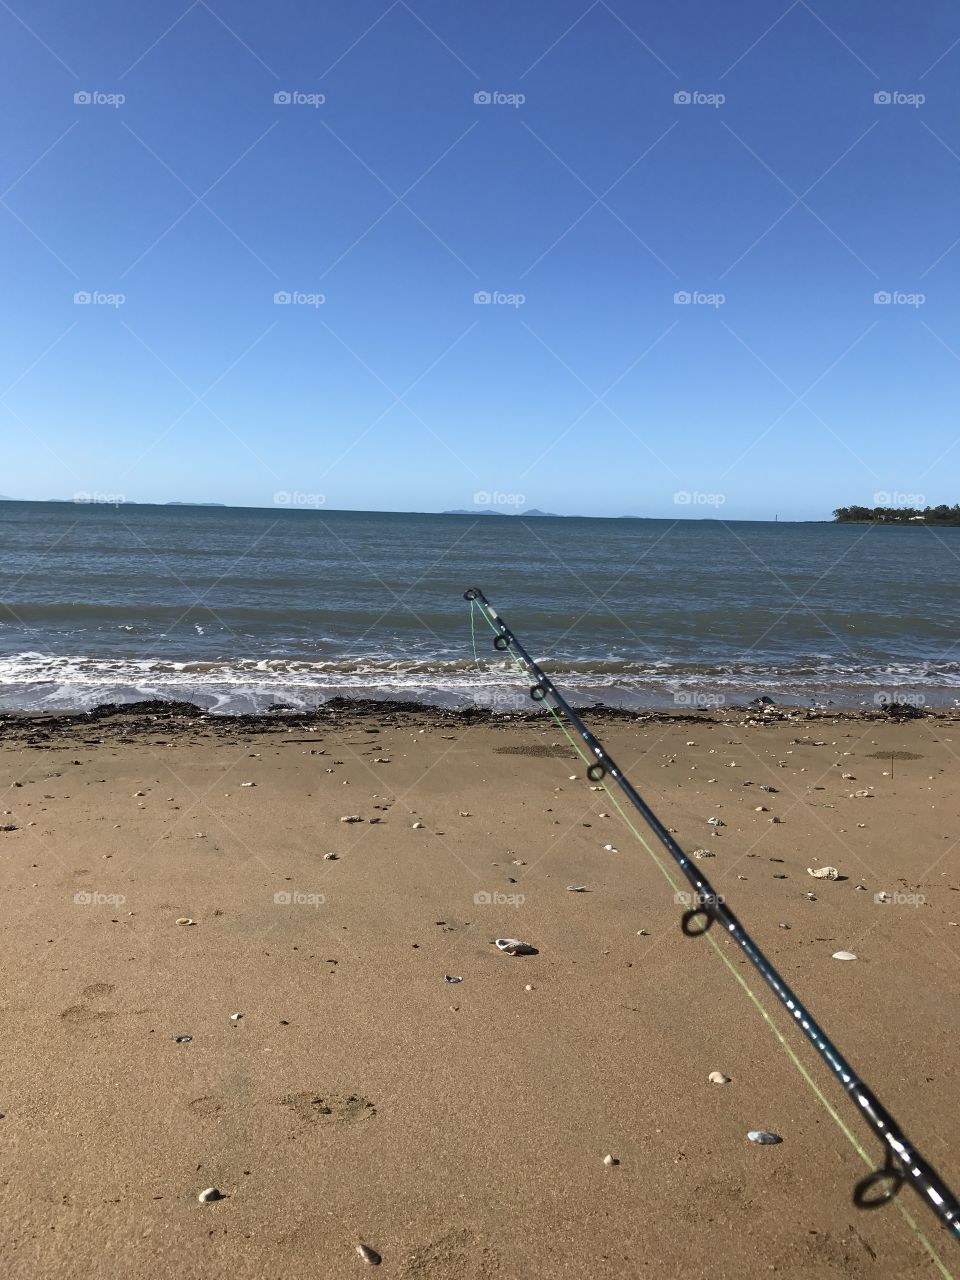 Seaforth Beach Fishing 2017